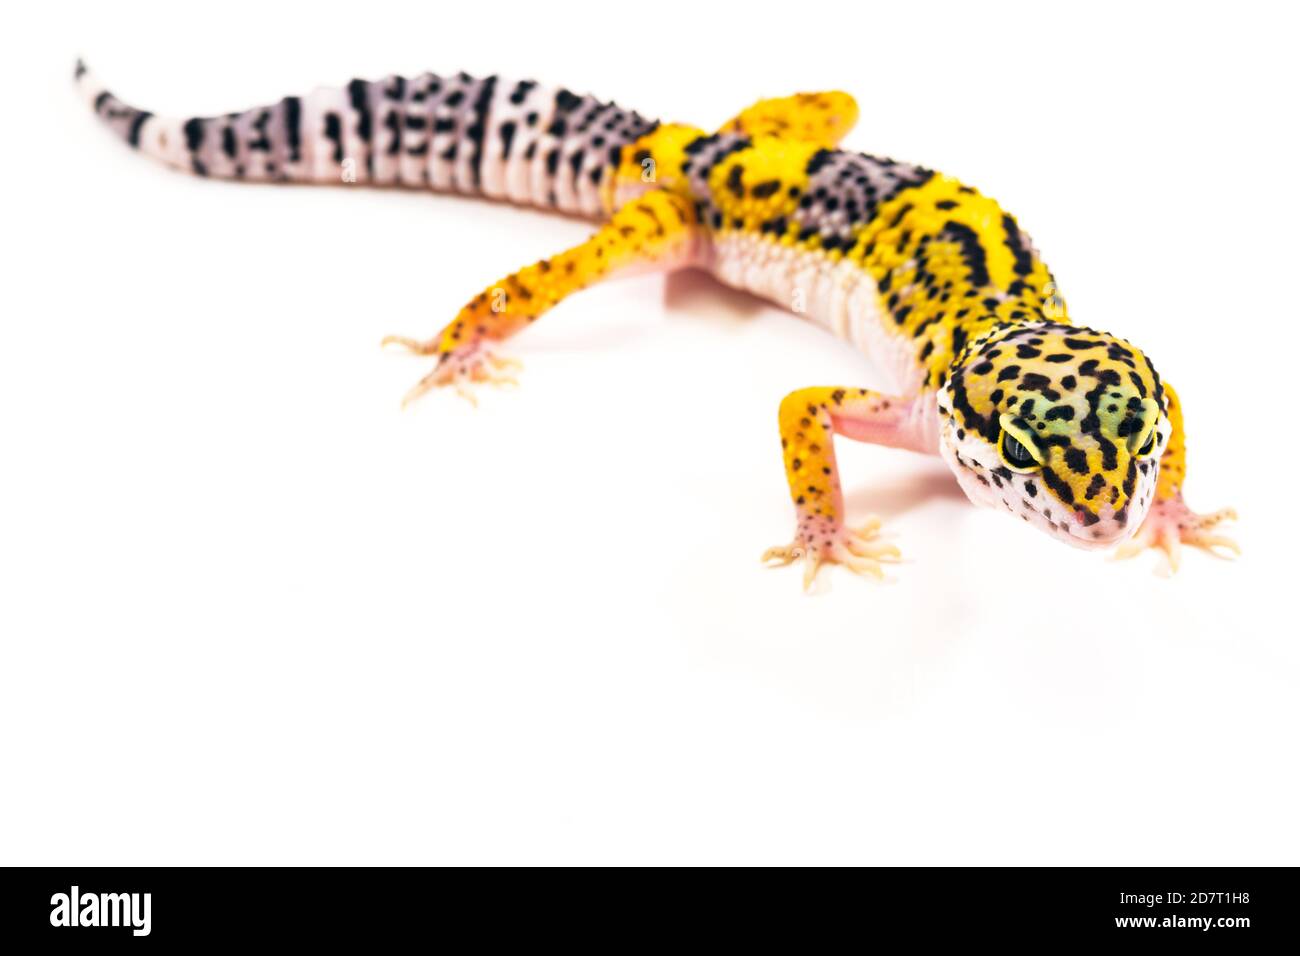 Eublepharis Macularius is cute leopard gecko. Stock Photo